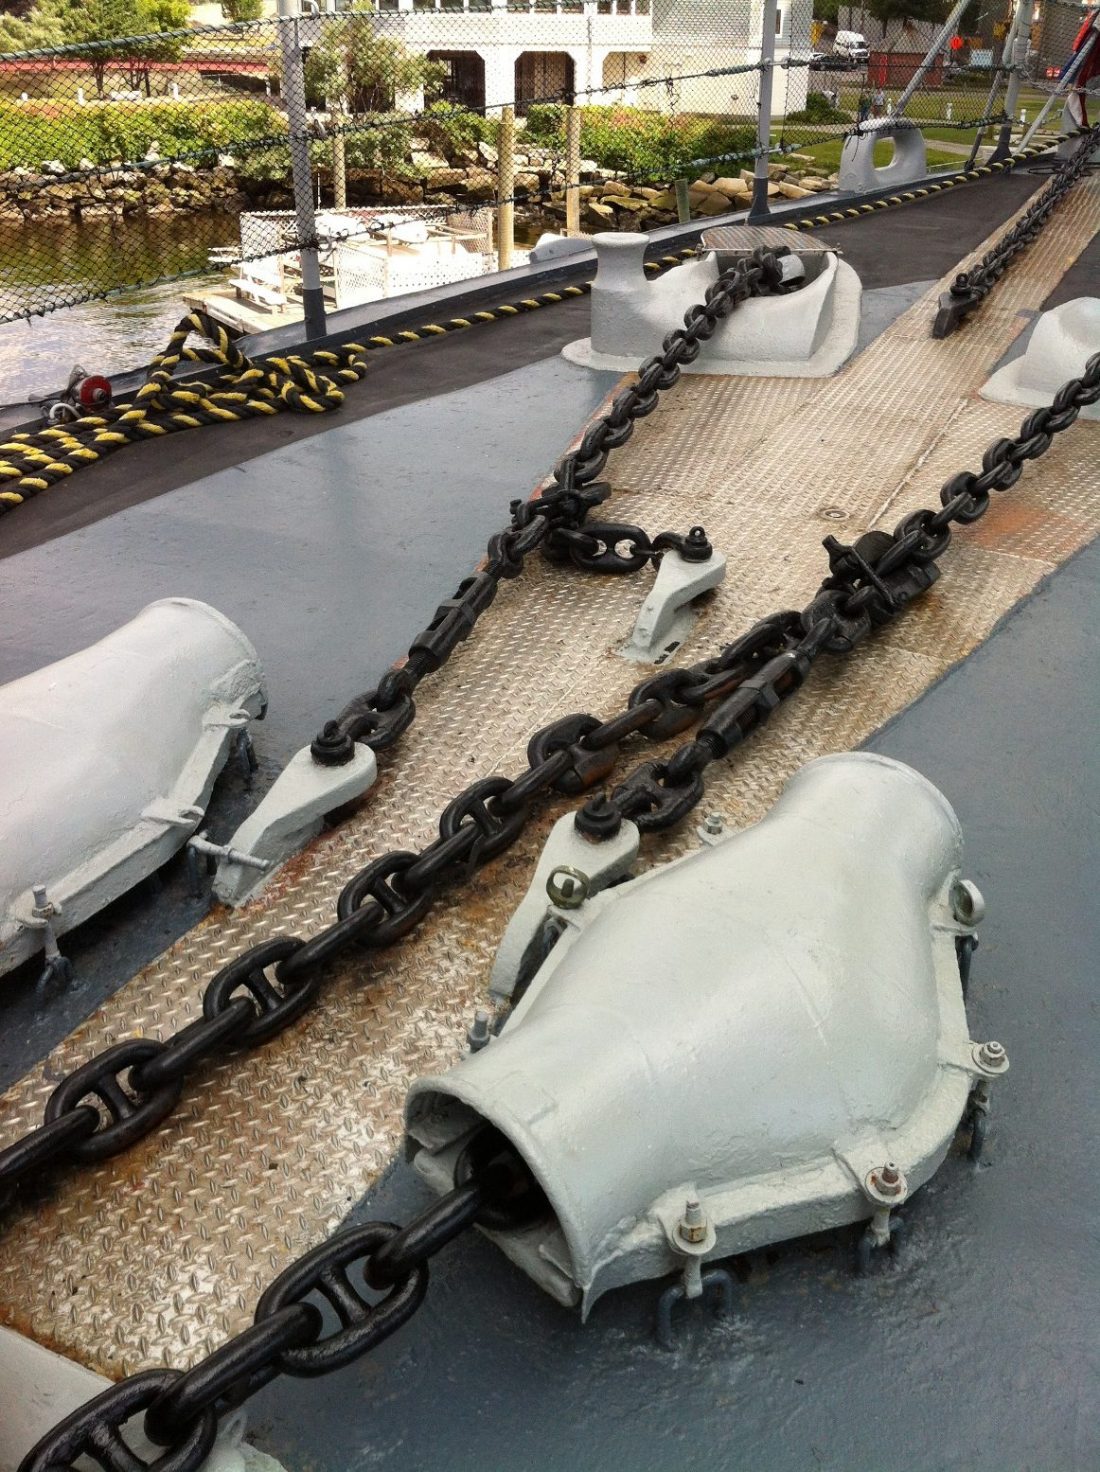 Anchor chains on the USS Joseph P. Kennedy, Jr., Battleship Cove, Fall River, MA, July 2014 (Photo: Sarah Sundin)